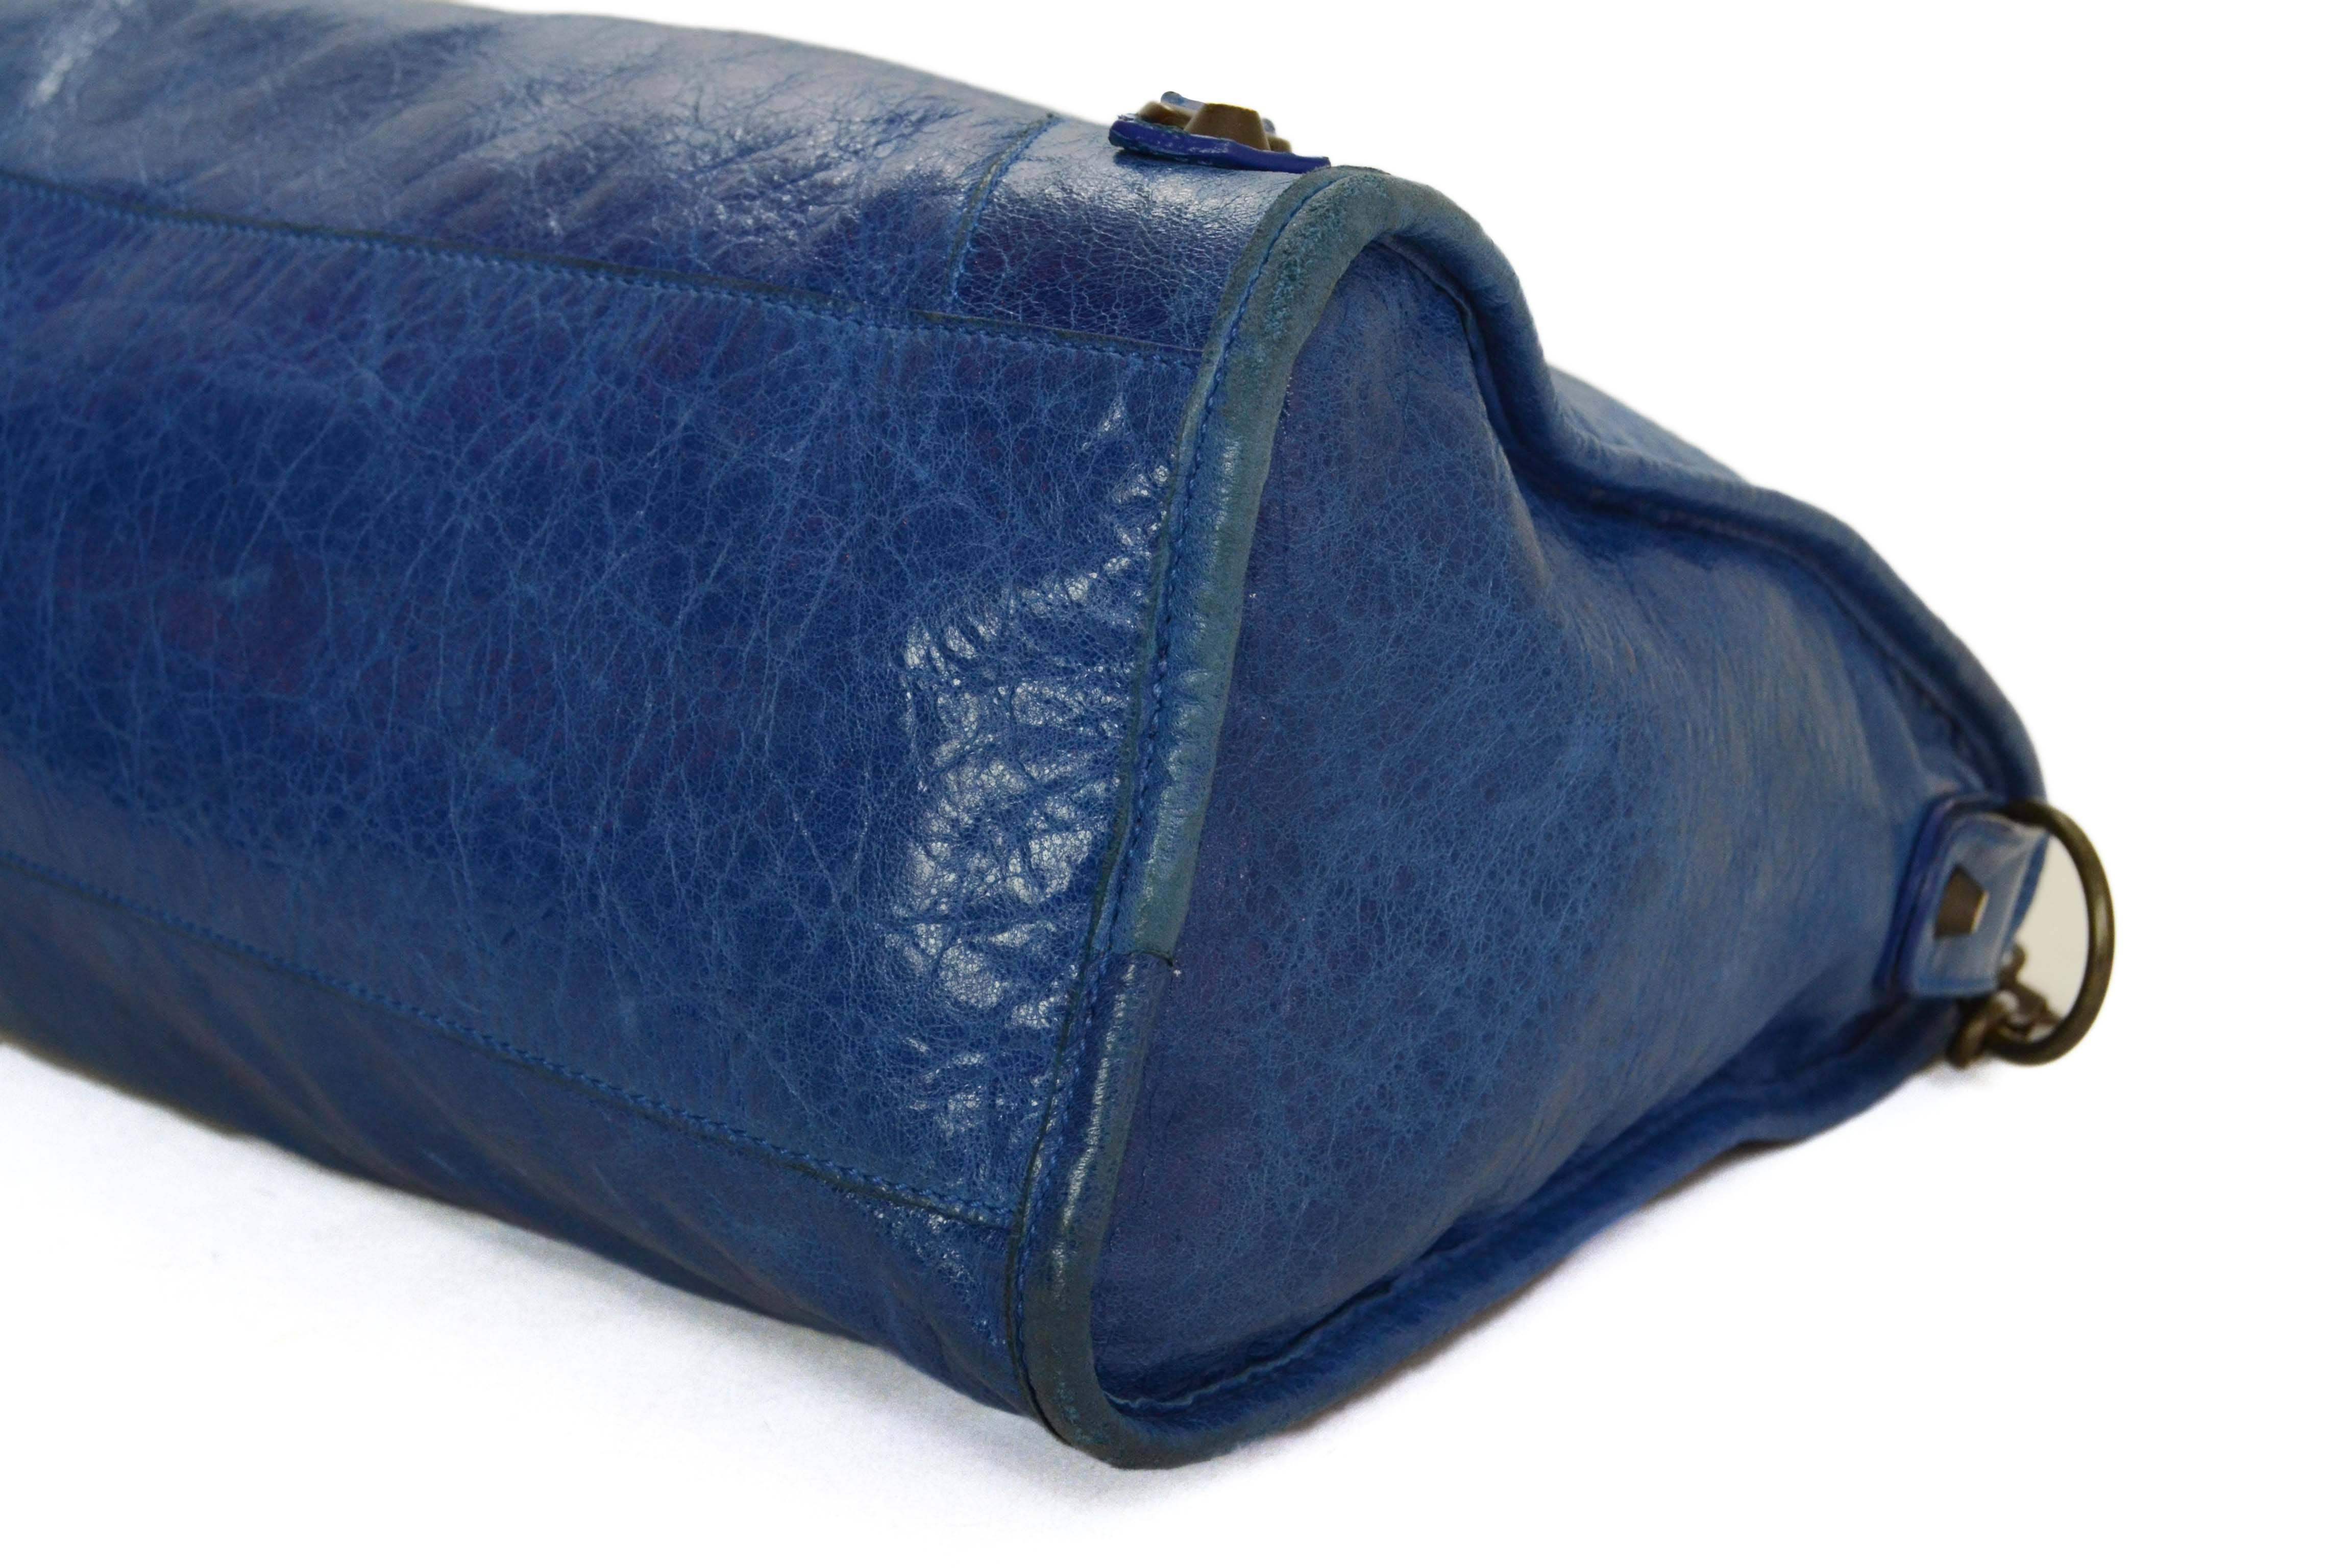 distressed leather handbags